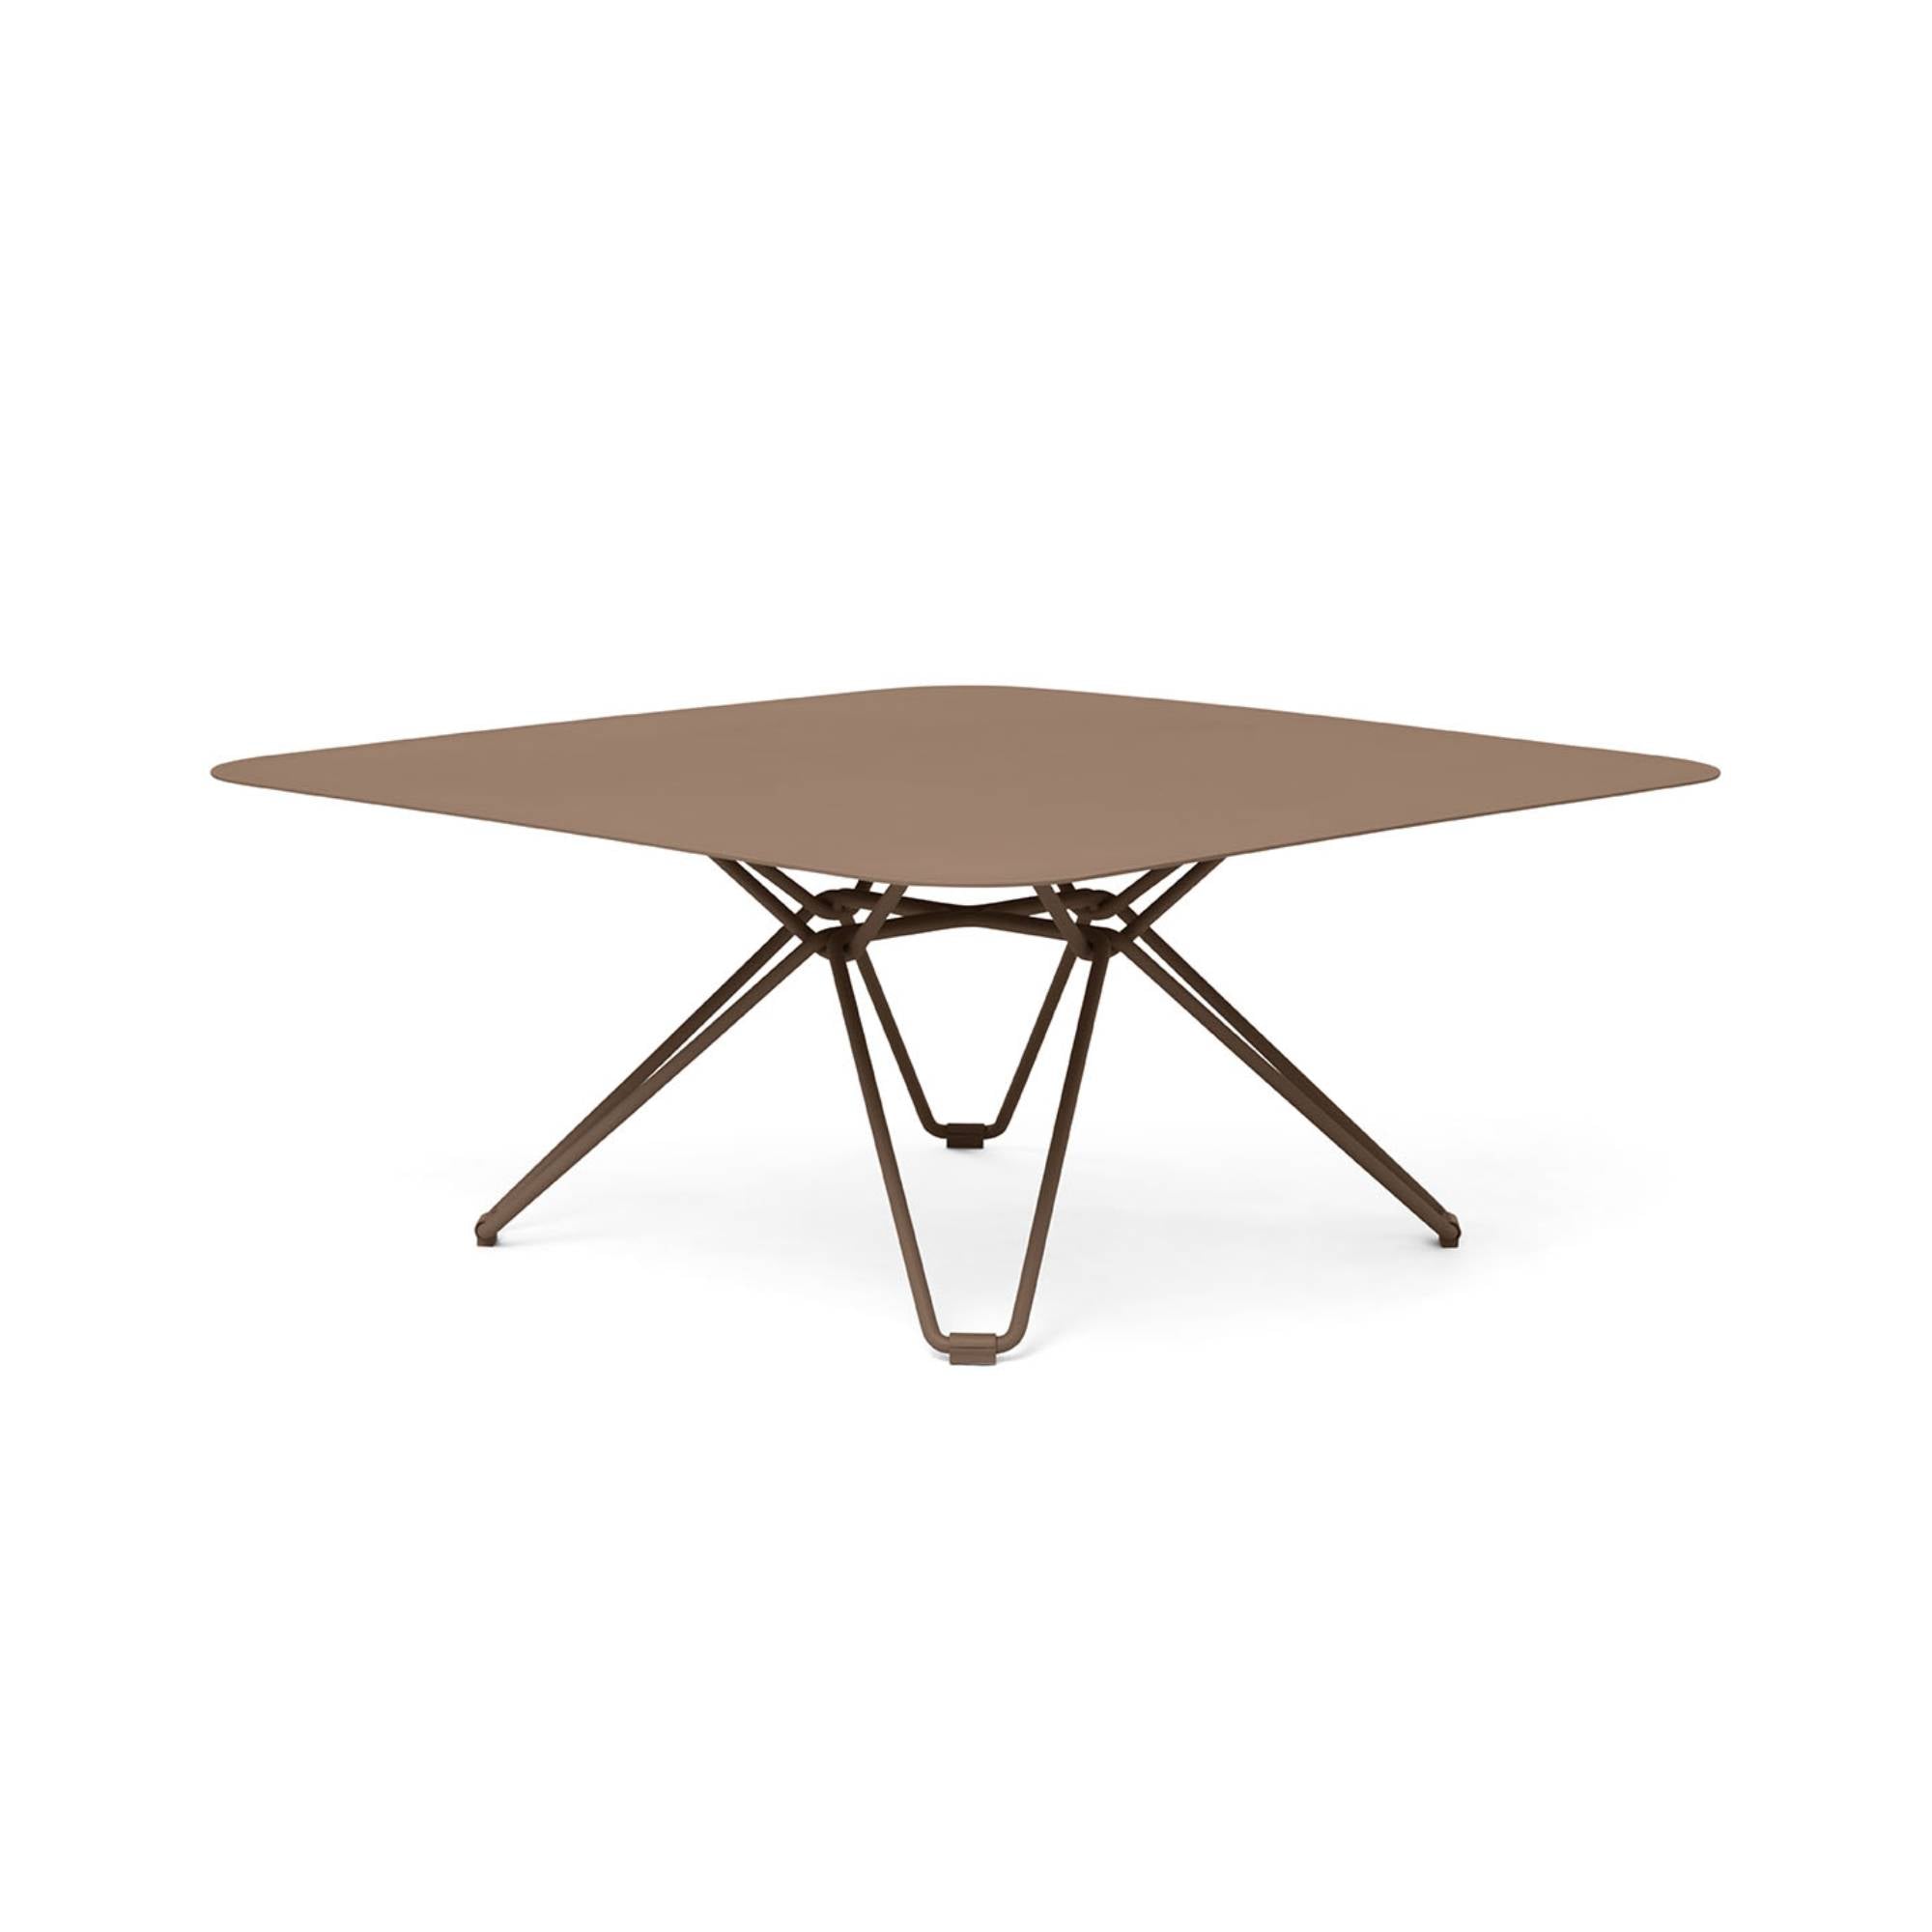 Tio Coffee Table: Square + Pale Brown Metal